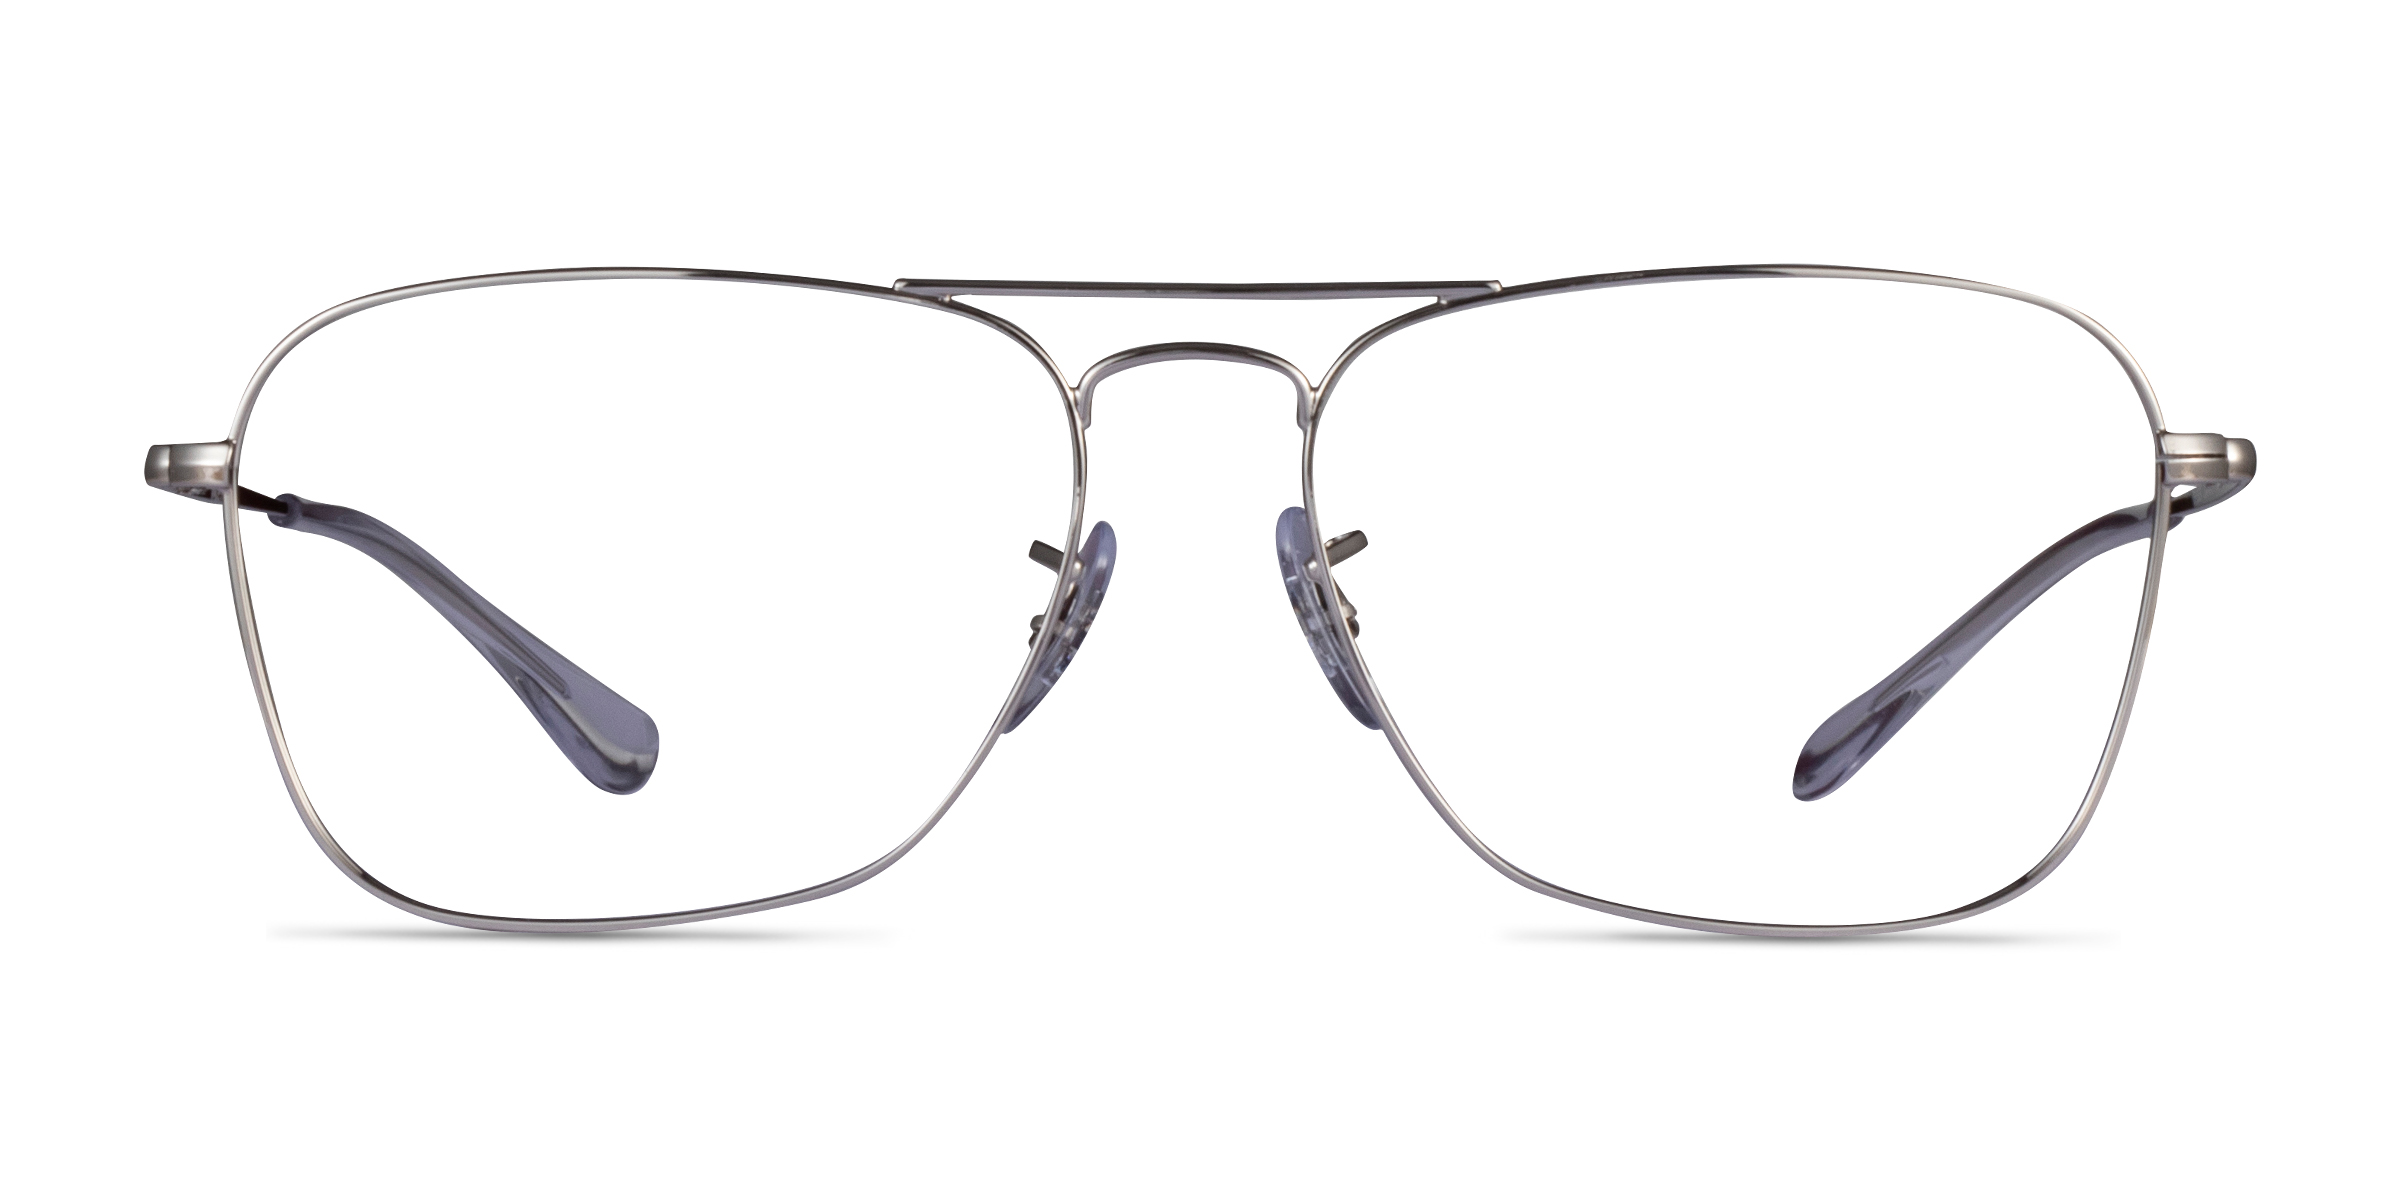 Ray-Ban RB6536 - Aviator Silver Frame Eyeglasses | Eyebuydirect Canada